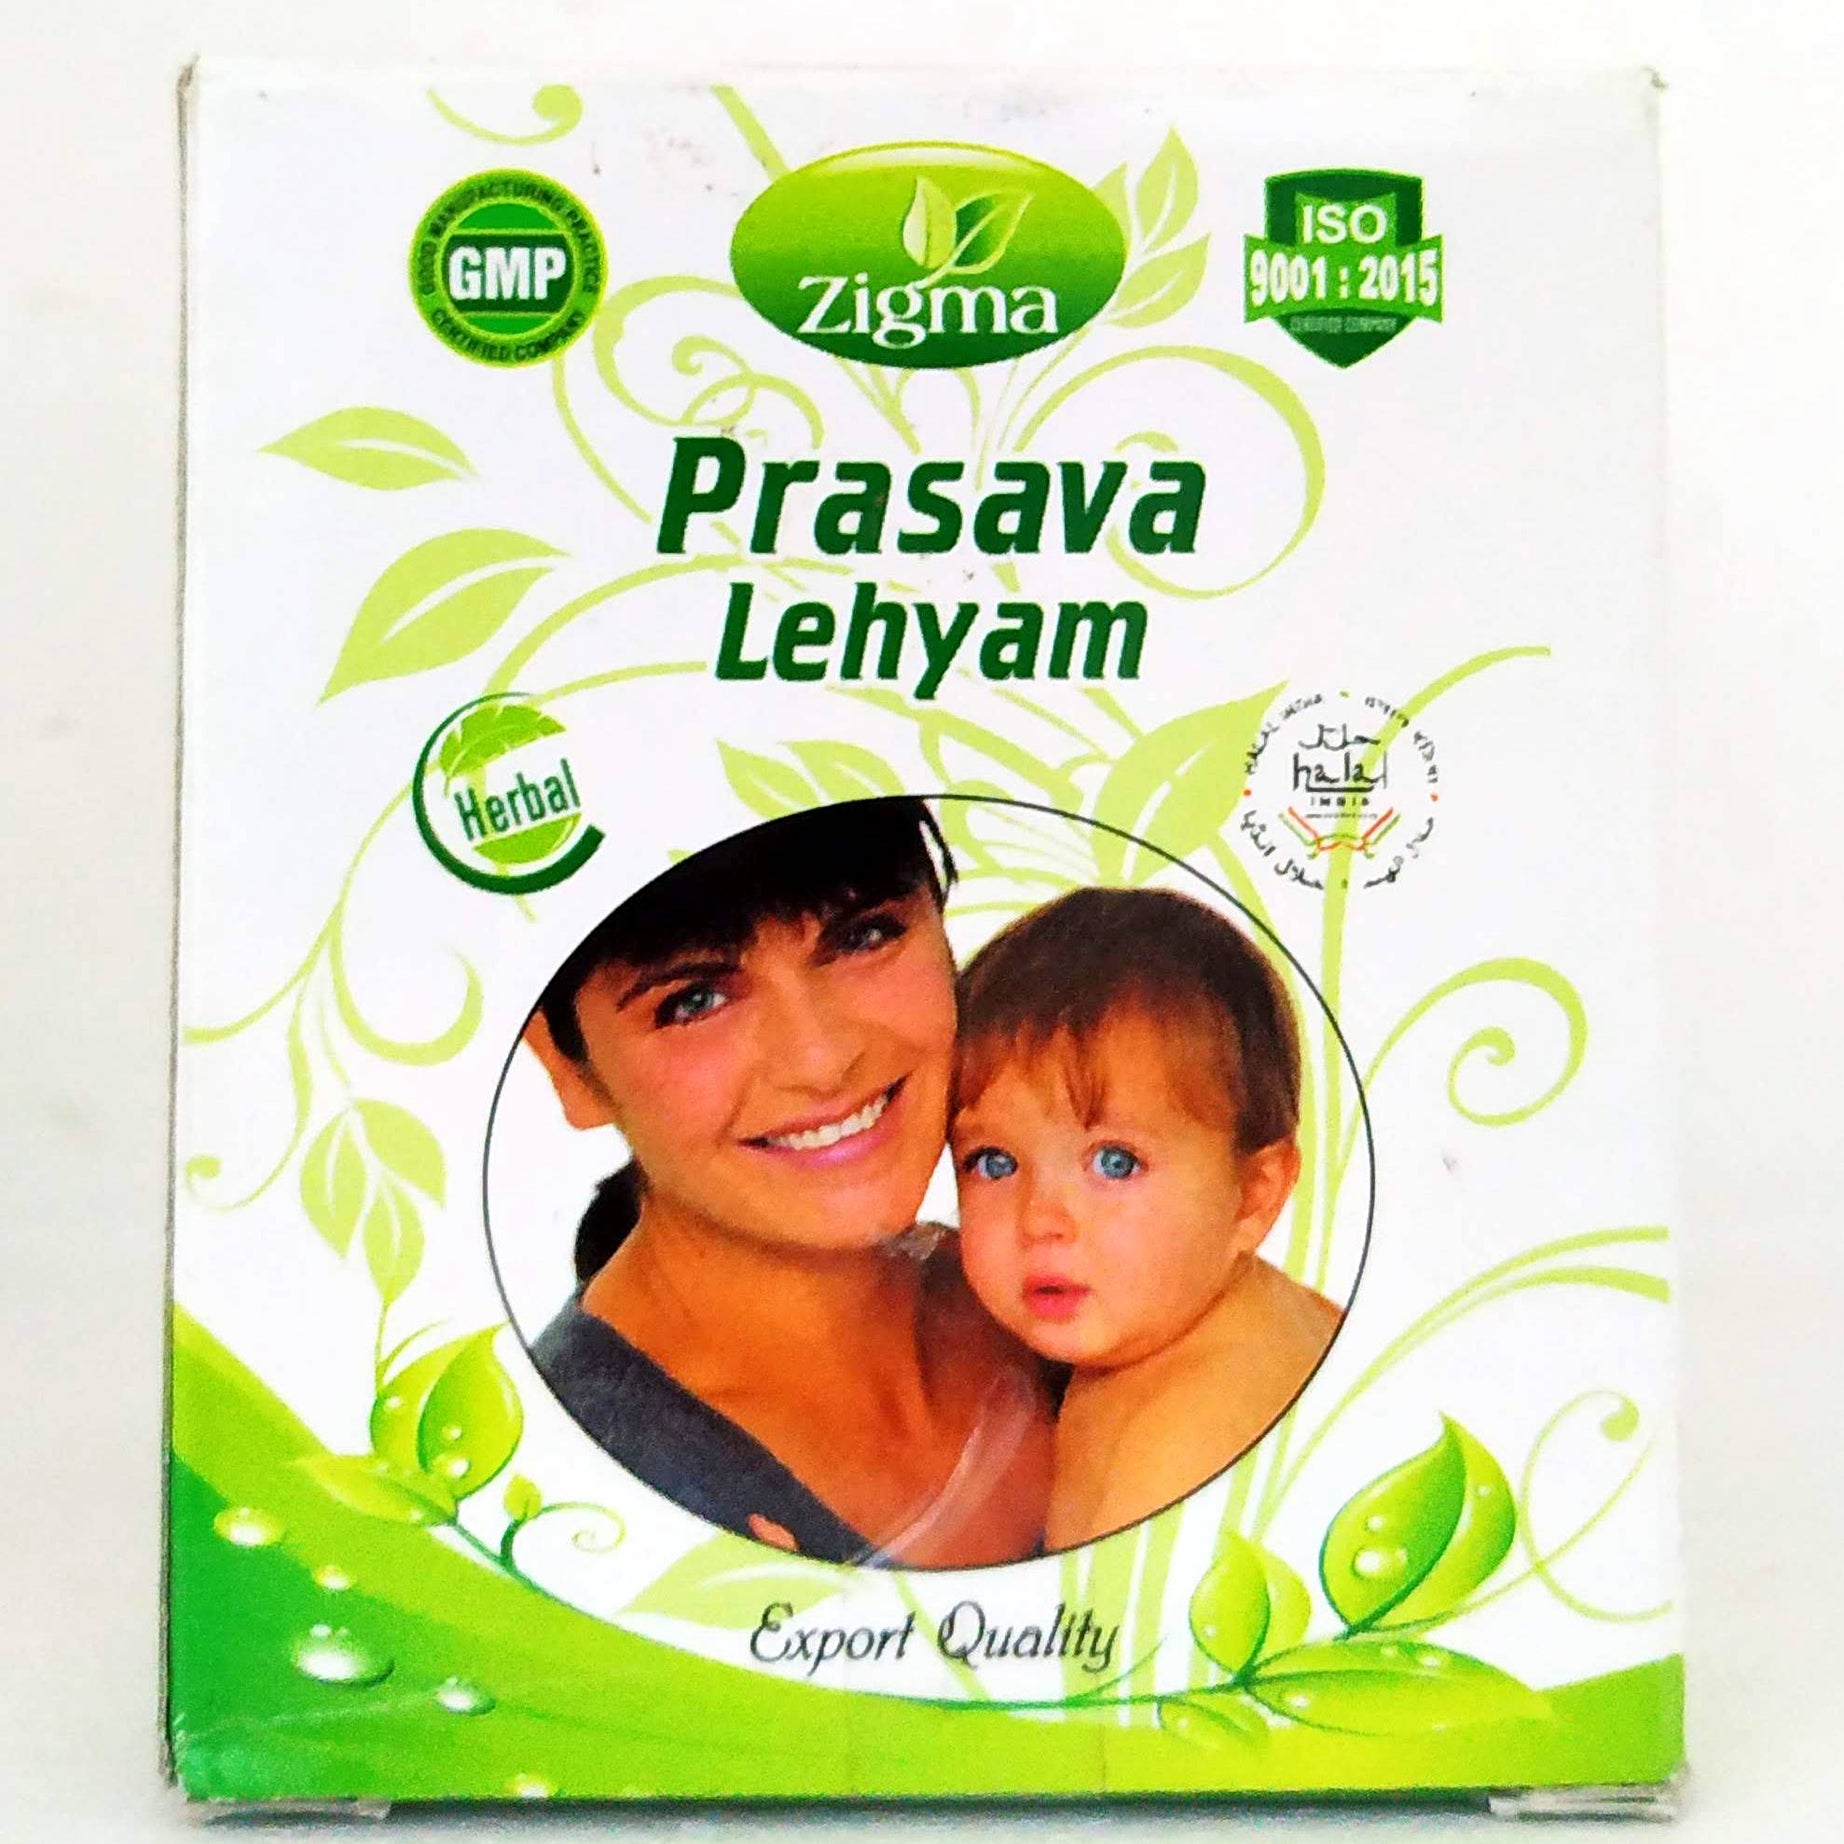 Shop Prasava lehyam 250gm at price 150.00 from Zigma Online - Ayush Care